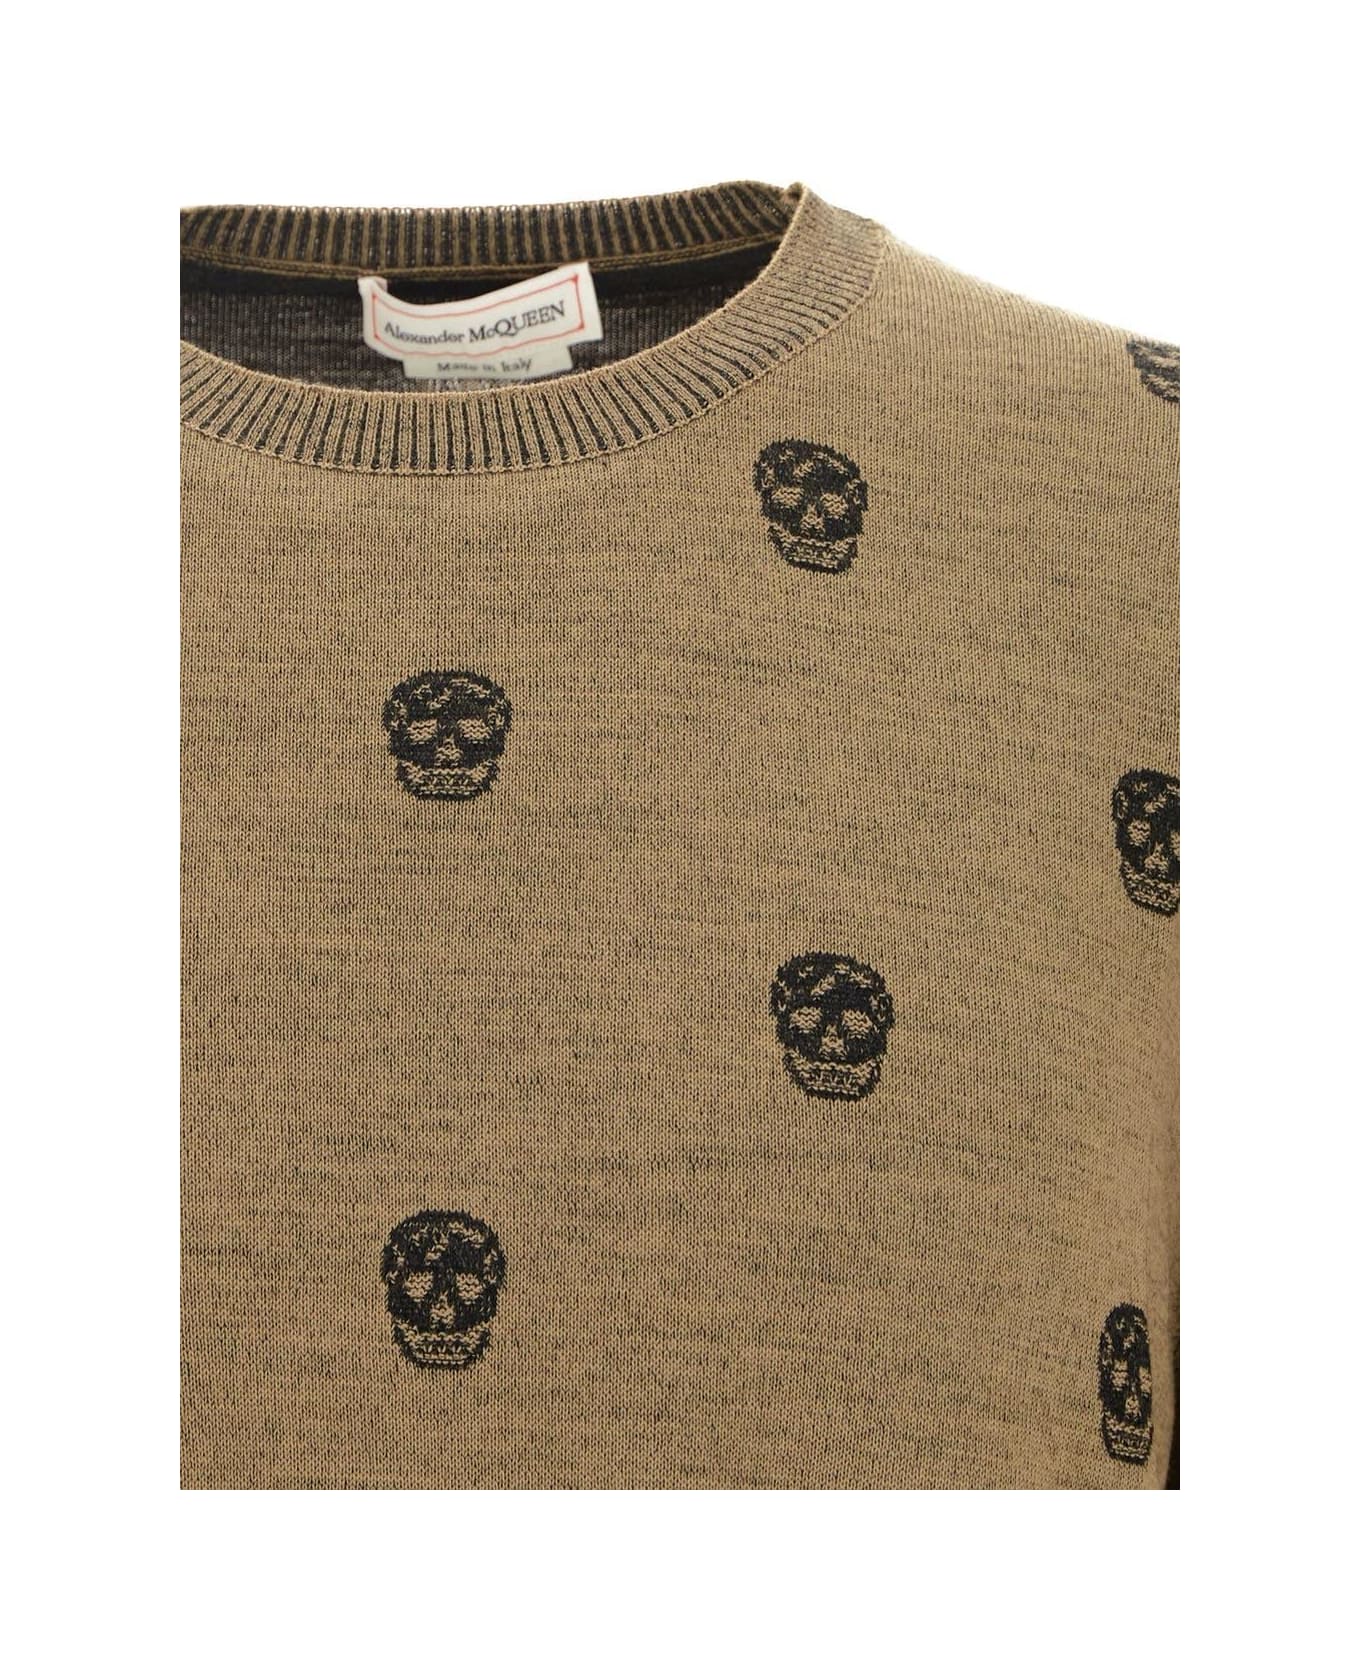 Alexander McQueen Skull Knit Sweater